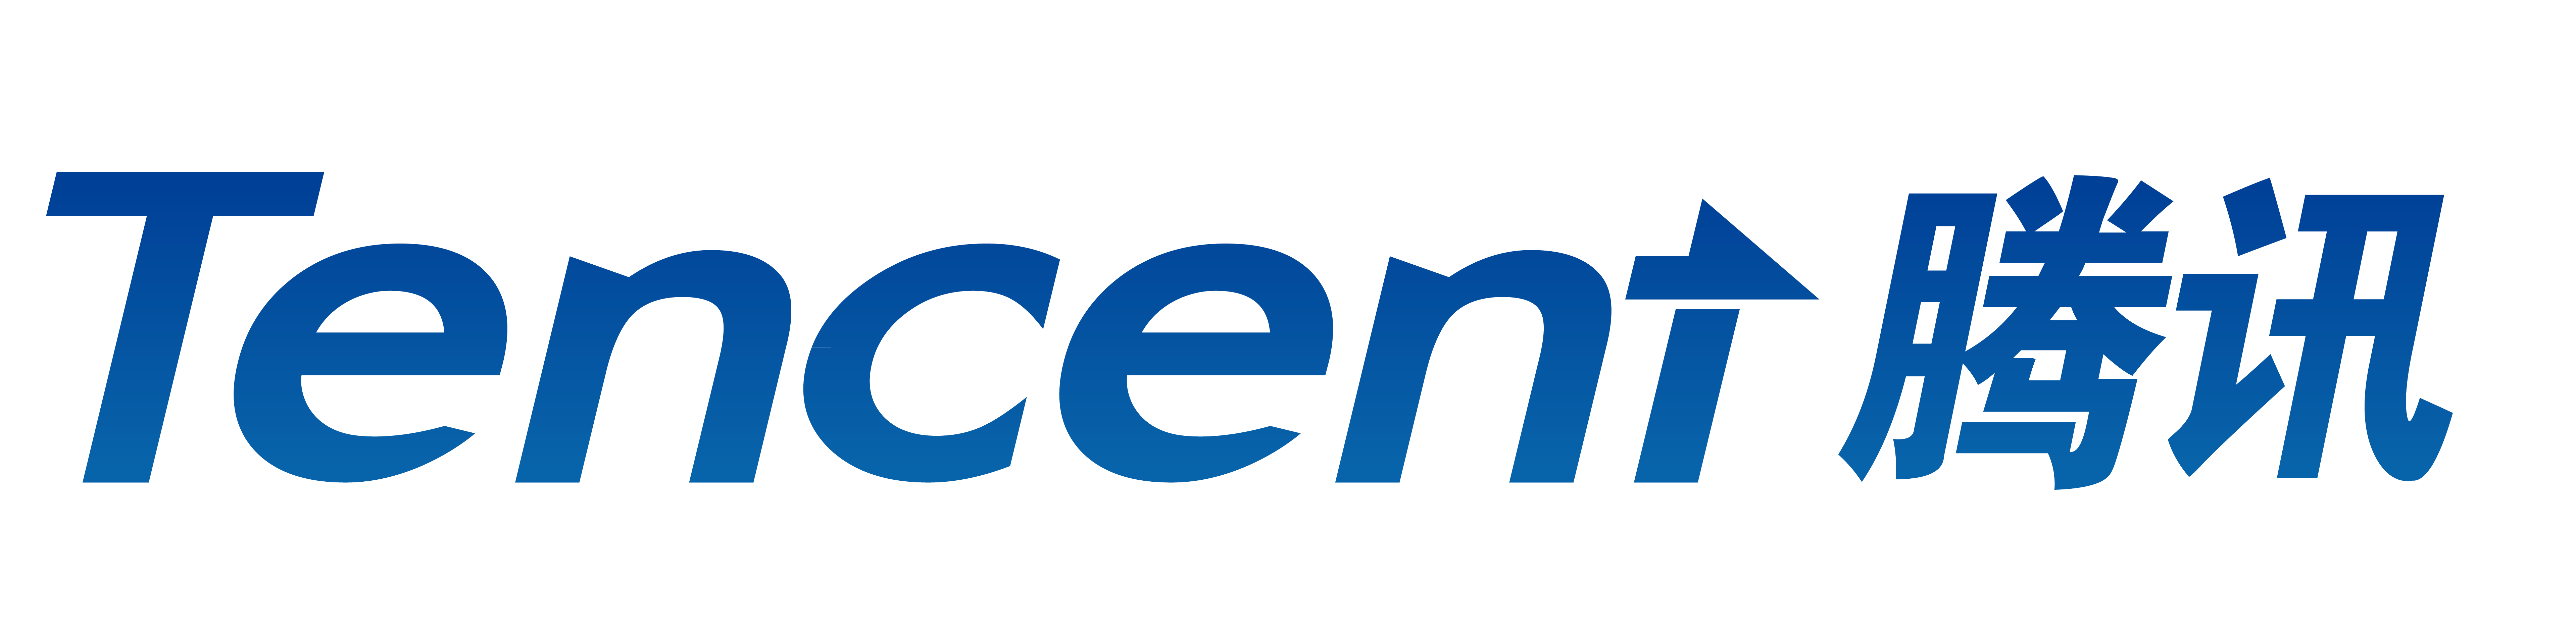 Tencent บริษัท IT ยักษ์ใหญ่จากแดนมังกรบุกเข้าตีตลาดประเทศไทยแบบเต็มตัวแล้ว!